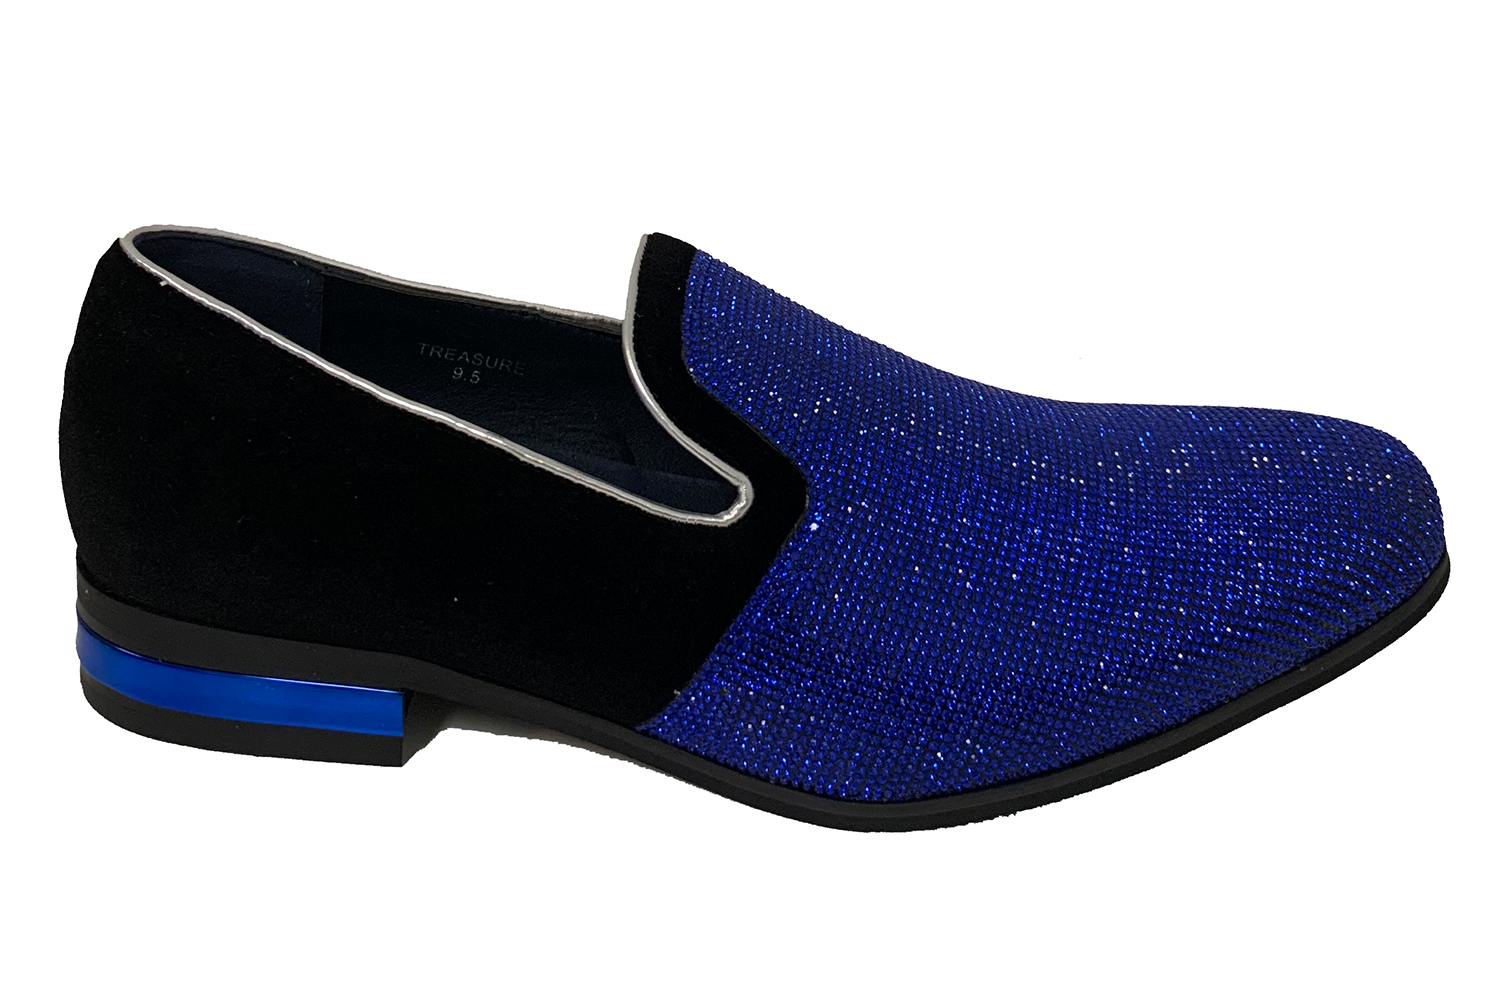 Men's Dress Shoes Loafer Glitter Tuxedo Stage Fashion Rhinestone Slip On - image 2 of 4